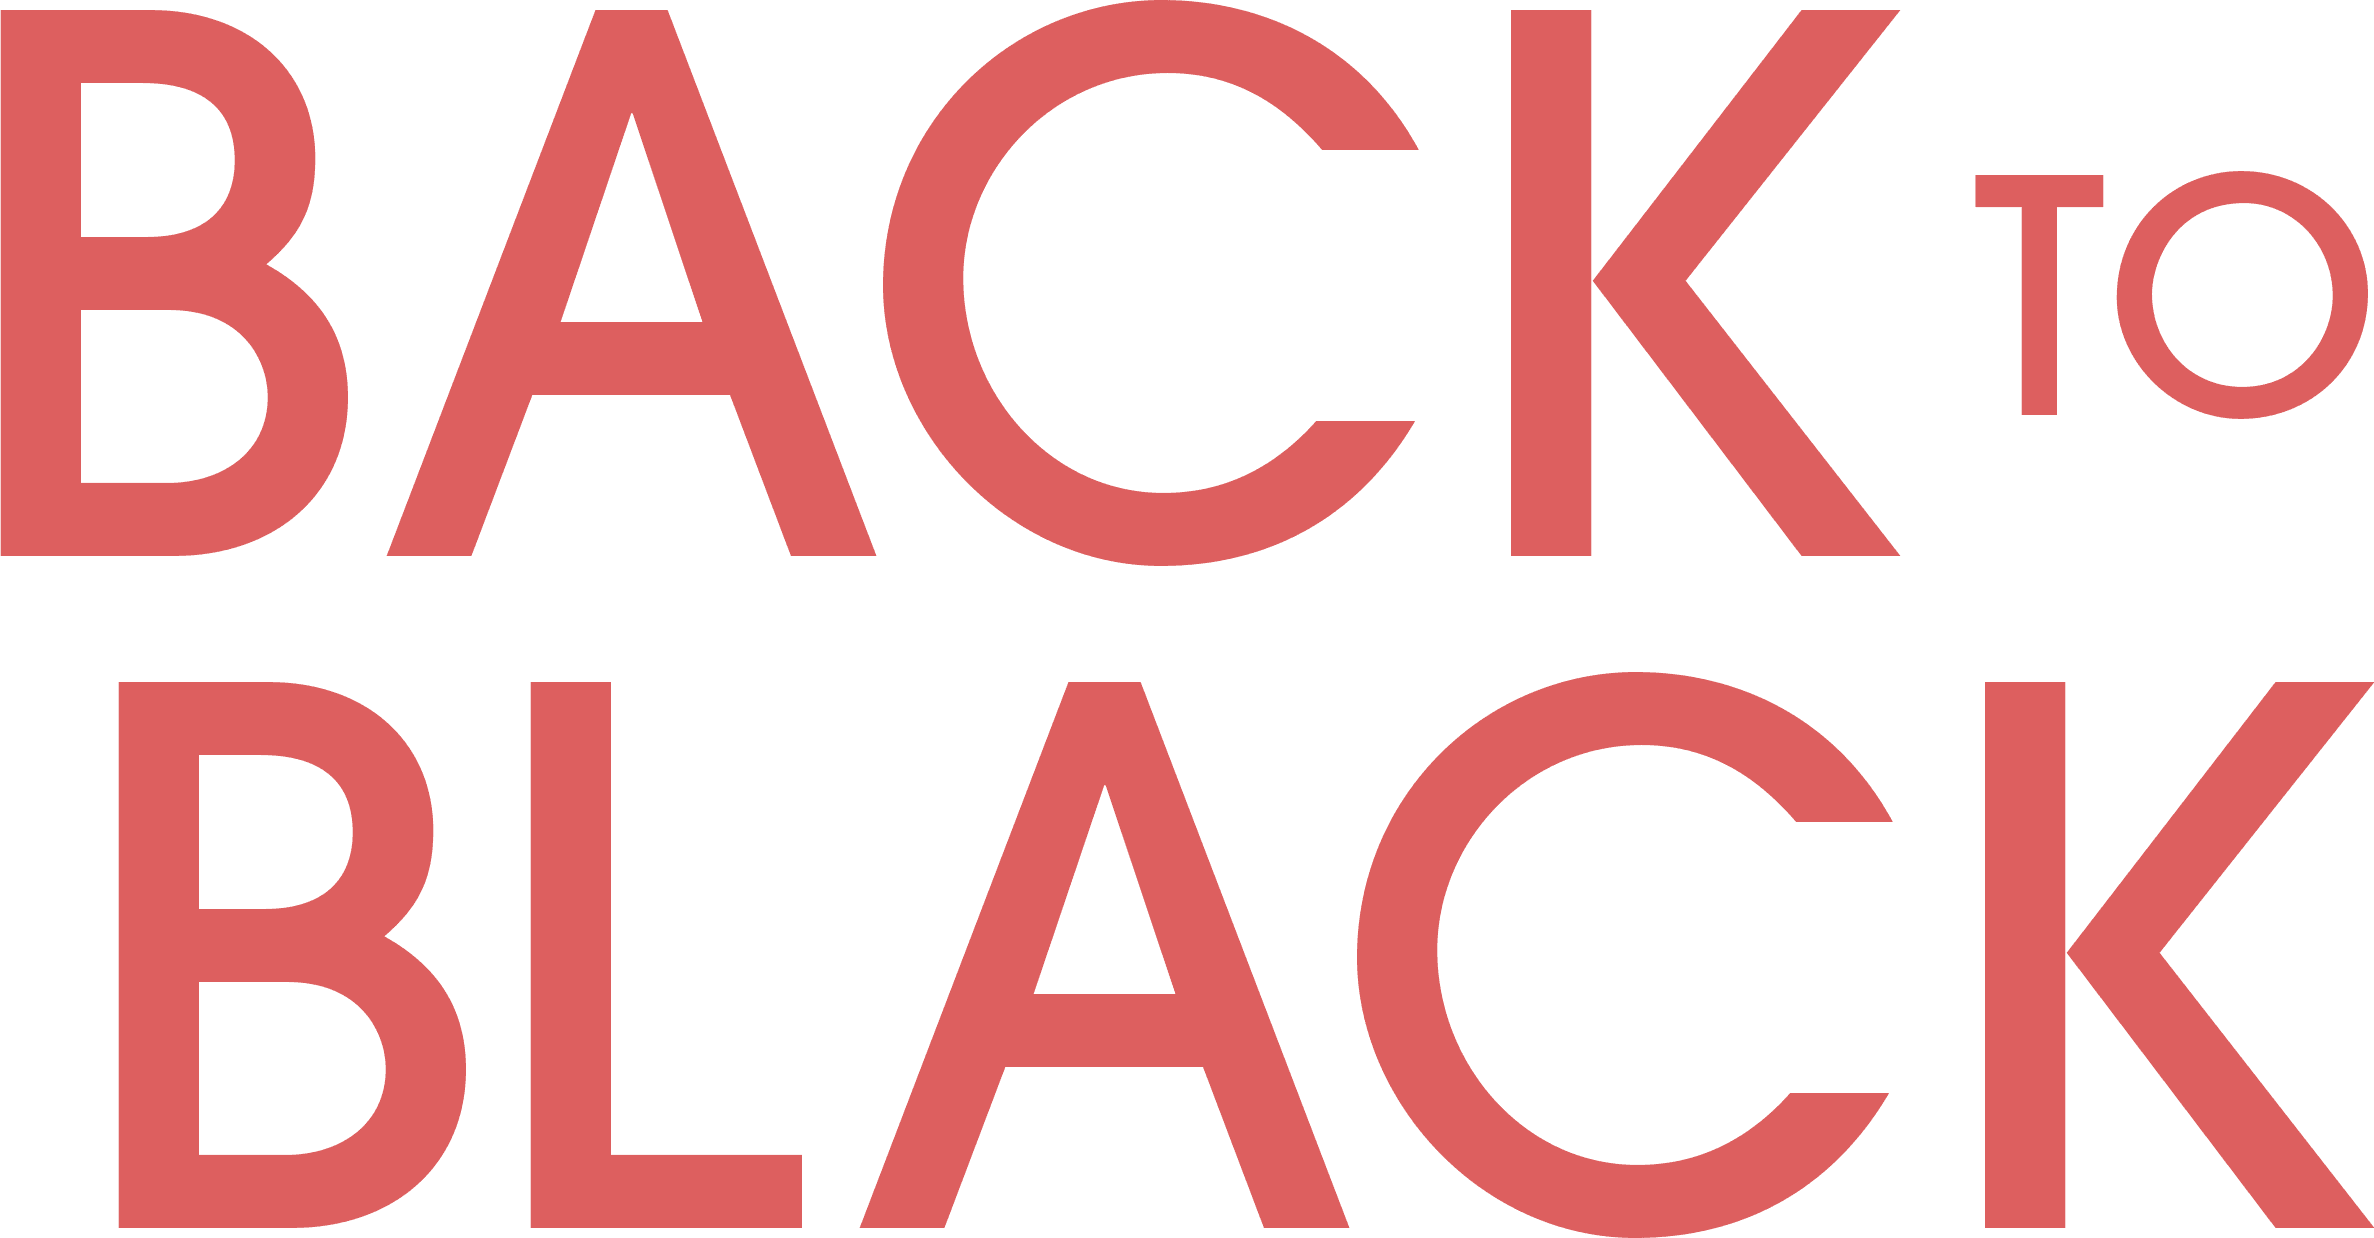 Back to Black logo